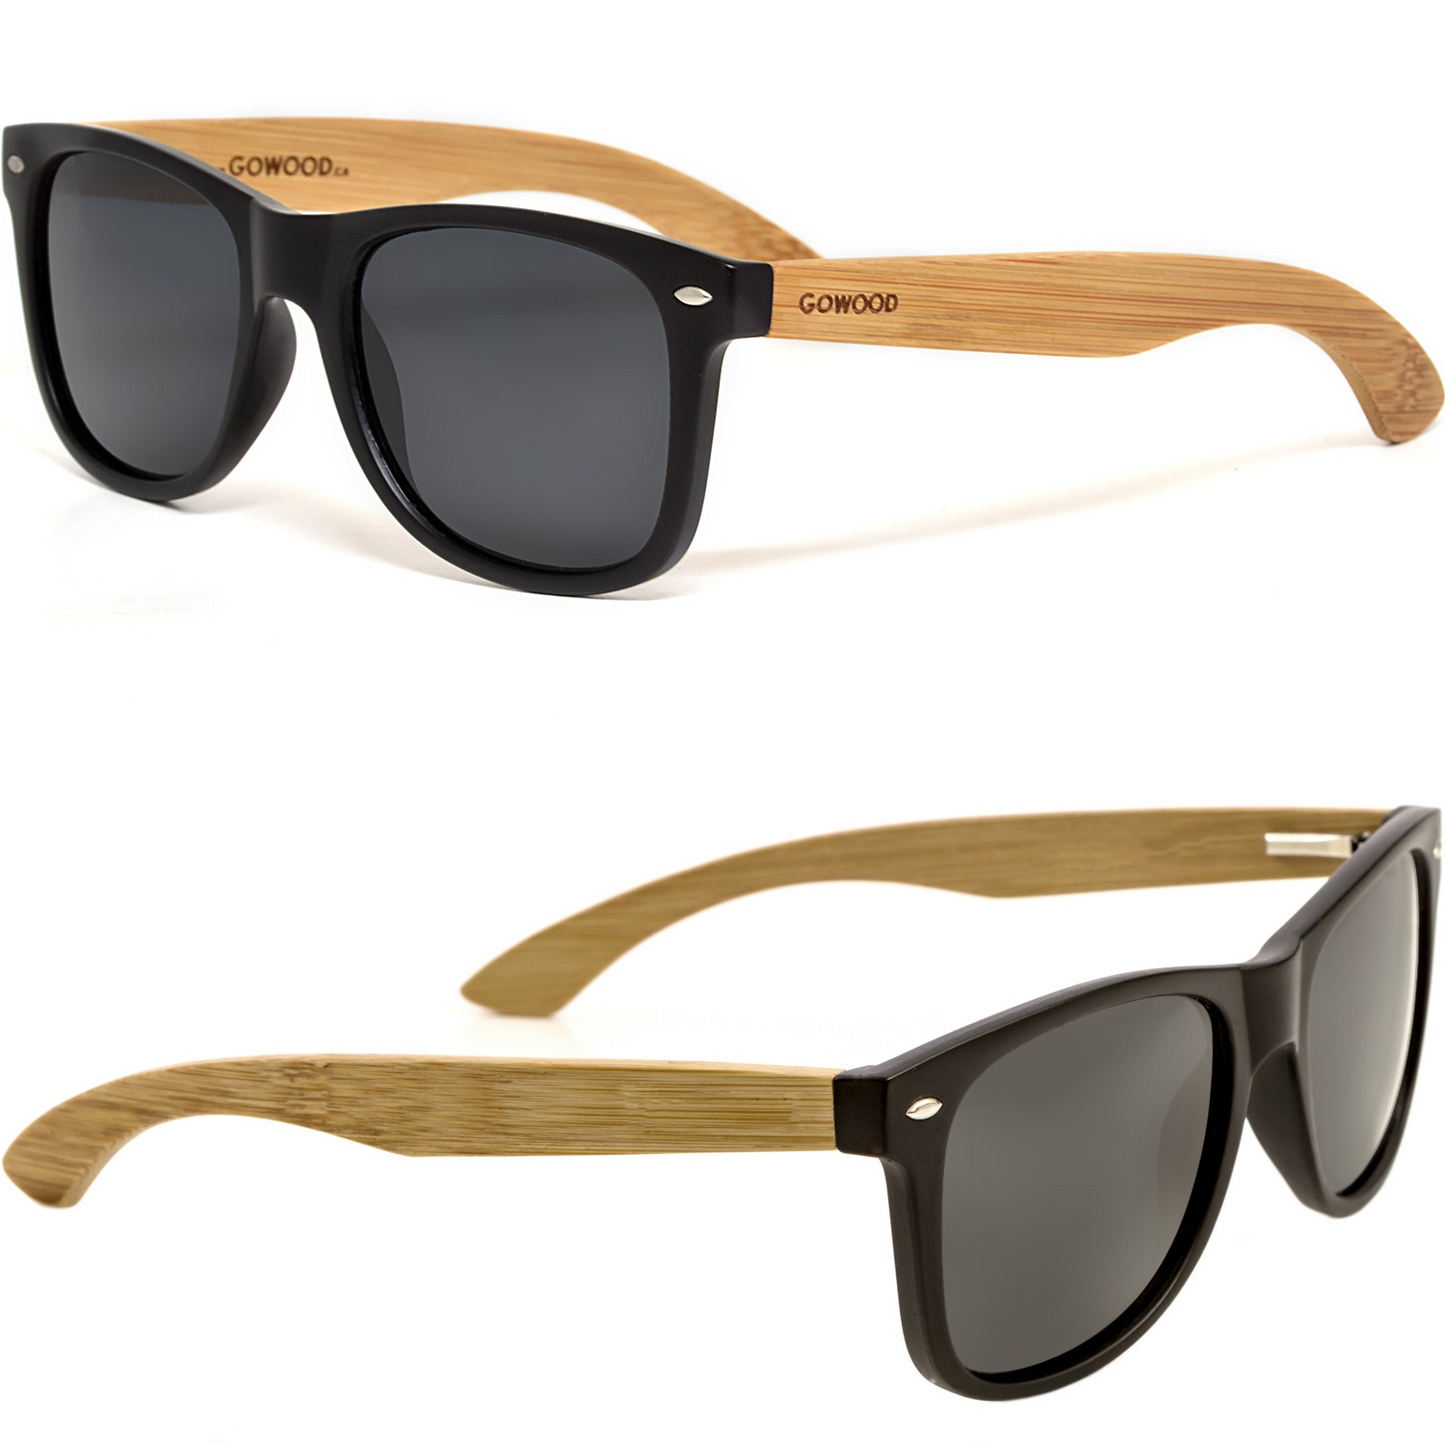 Bamboo wood classic style sunglasses with black polarized lenses